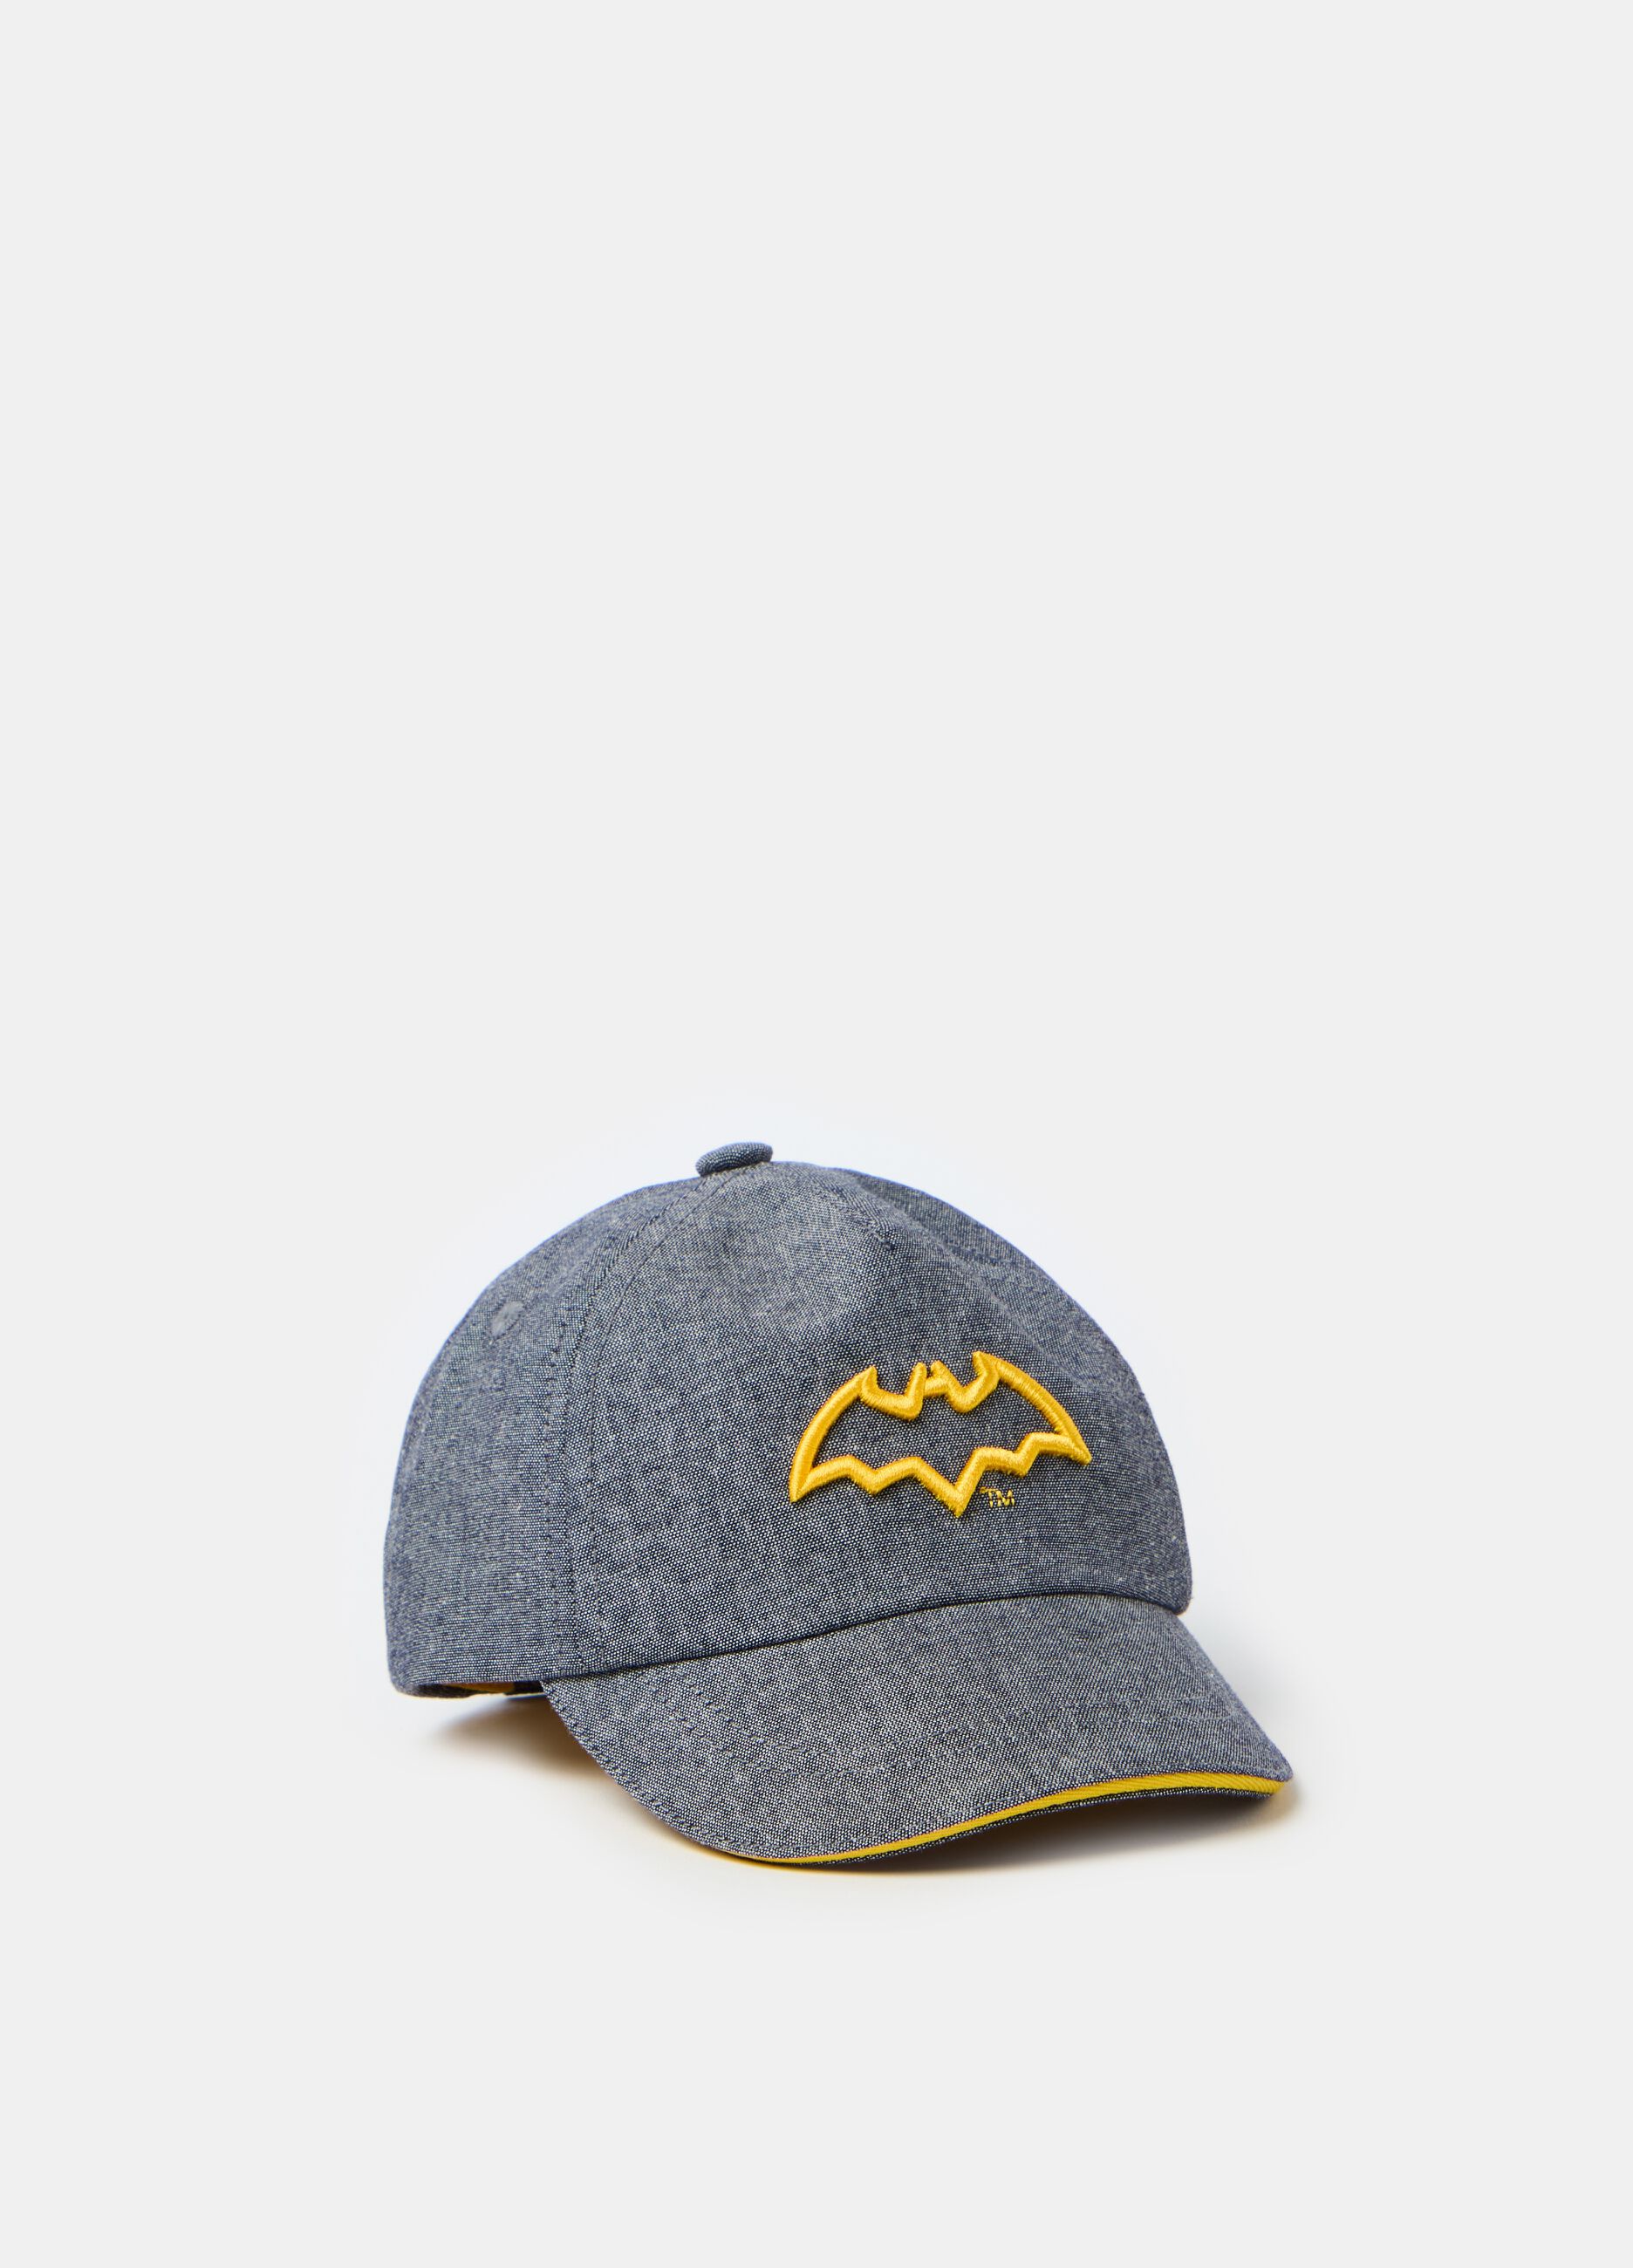 Baseball cap with Batman embroidery